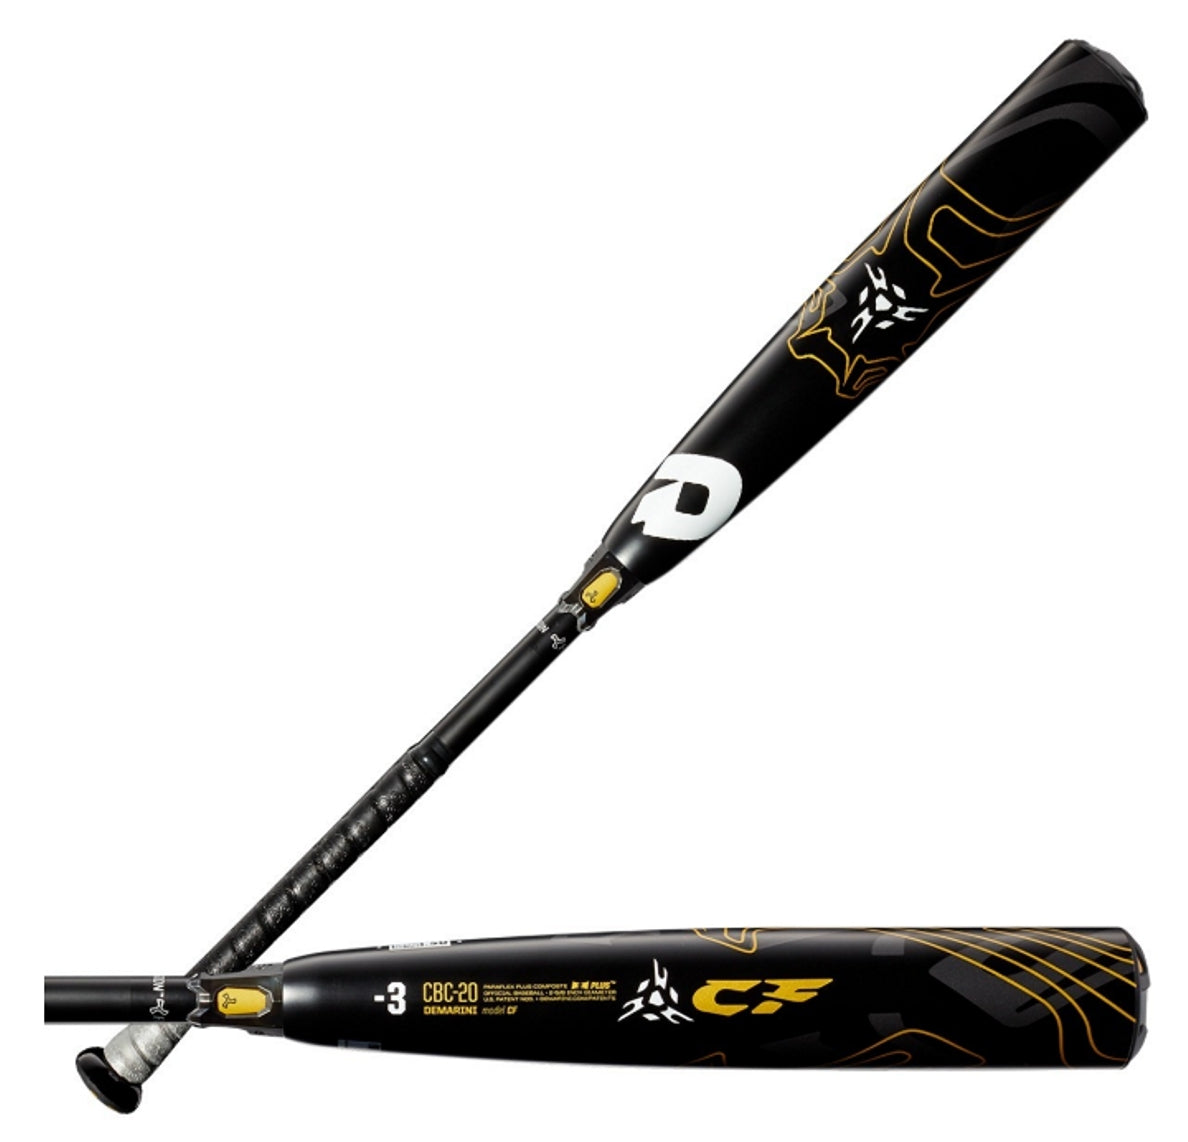 DeMarini 2020 CF BBCOR (-3) Baseball Bat (WTDXCBC-20)